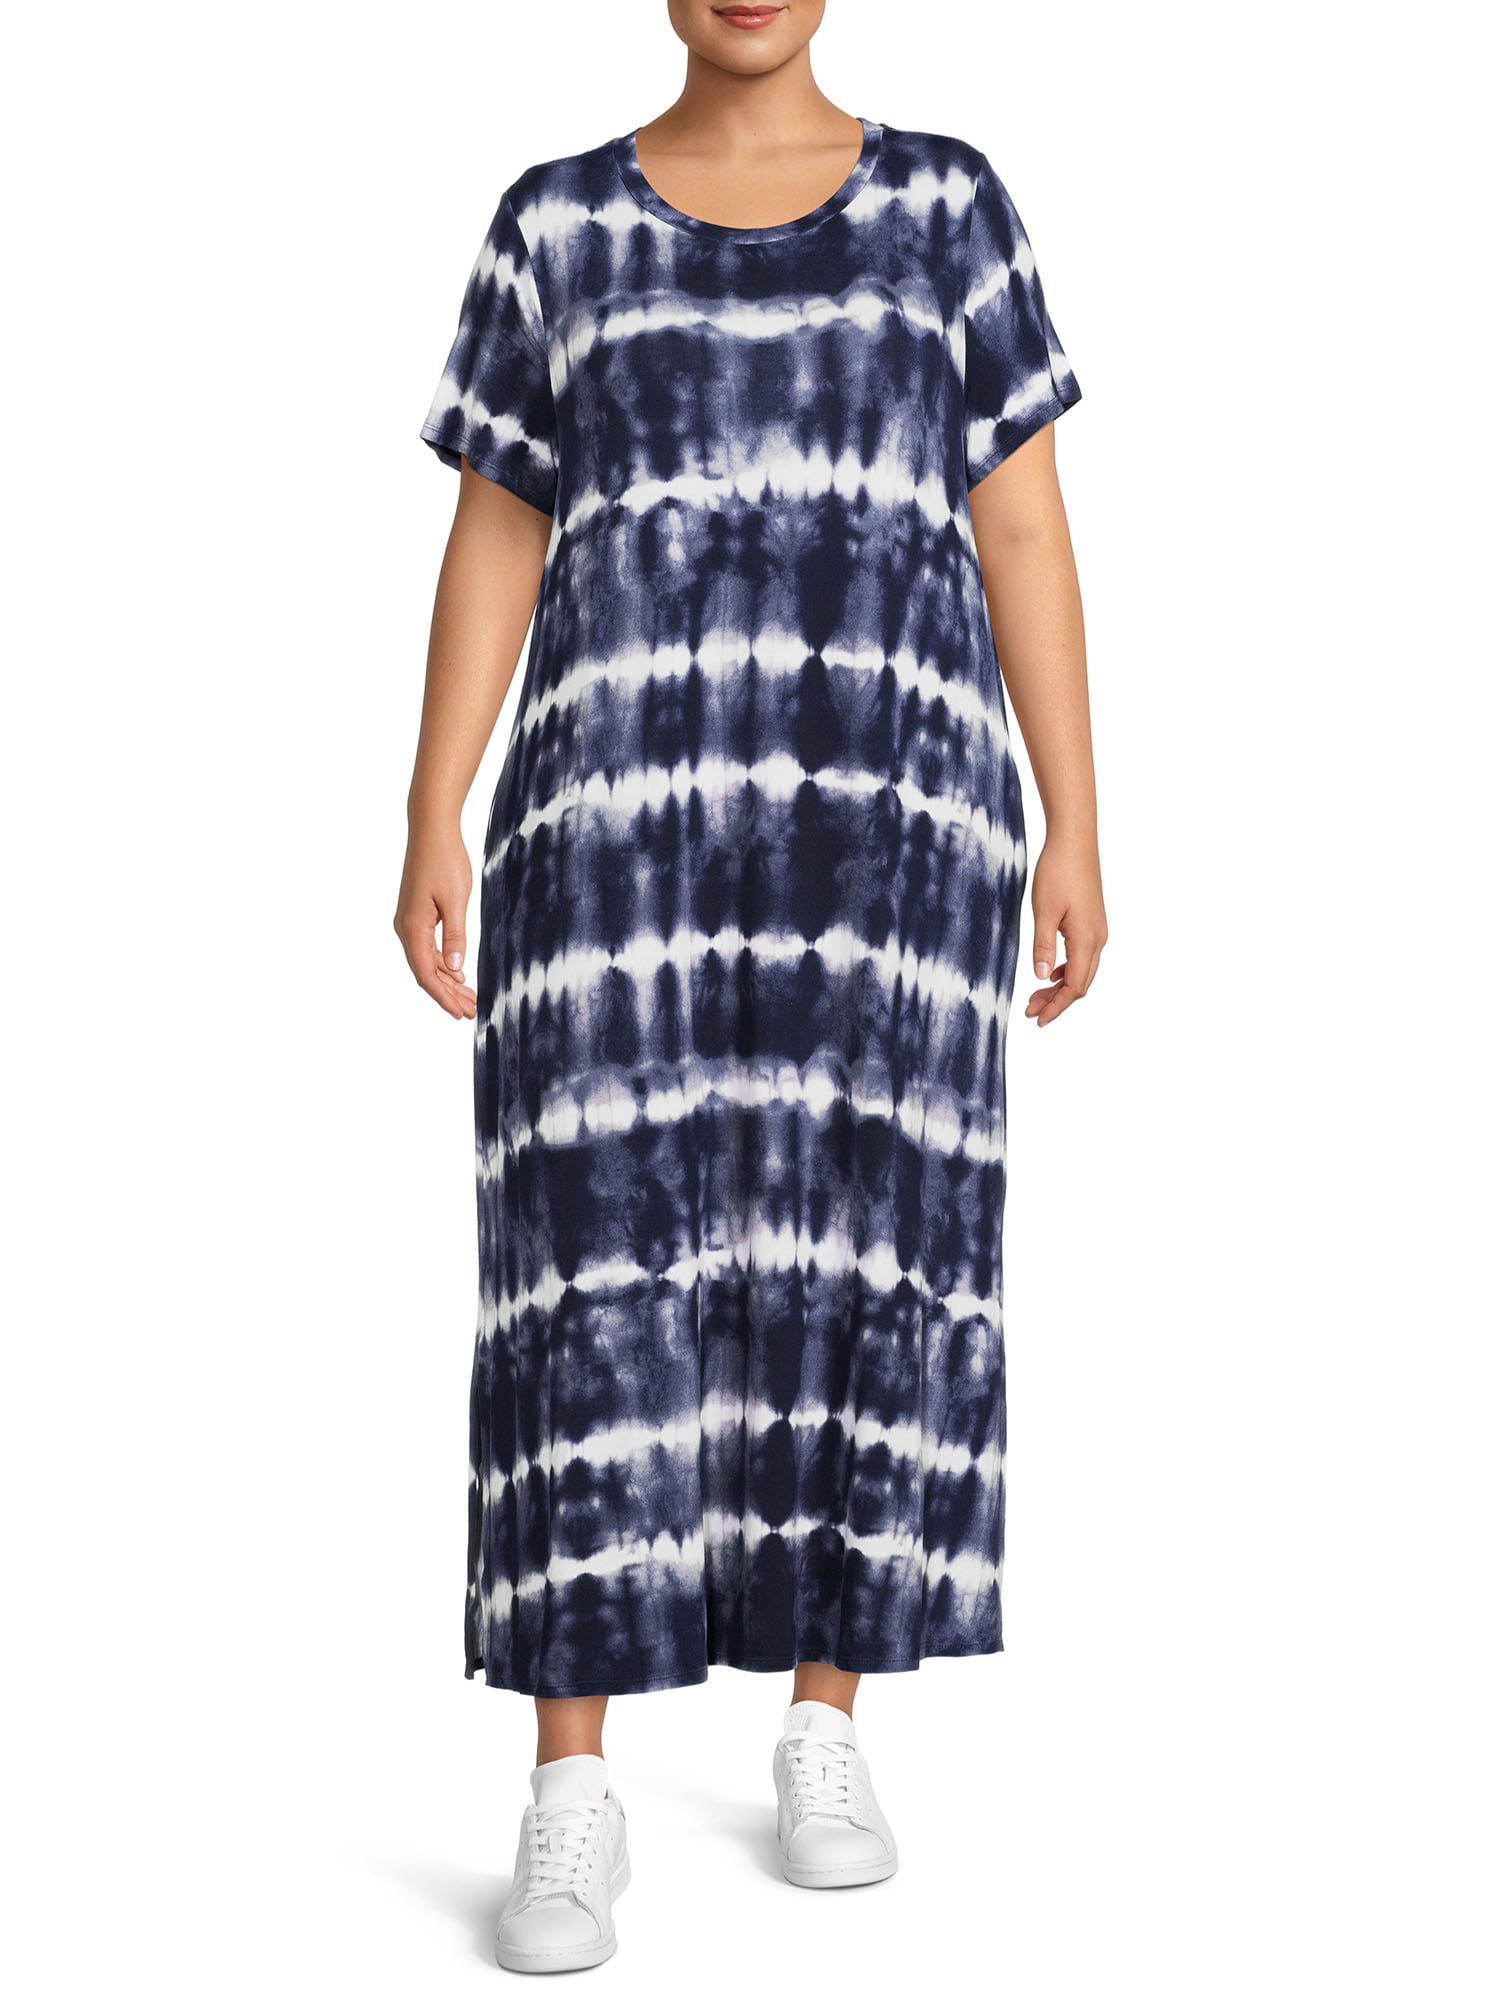 Minimer At passe Martyr Terra & Sky Women's Plus Size Maxi Dress with Side Slits - Walmart.com